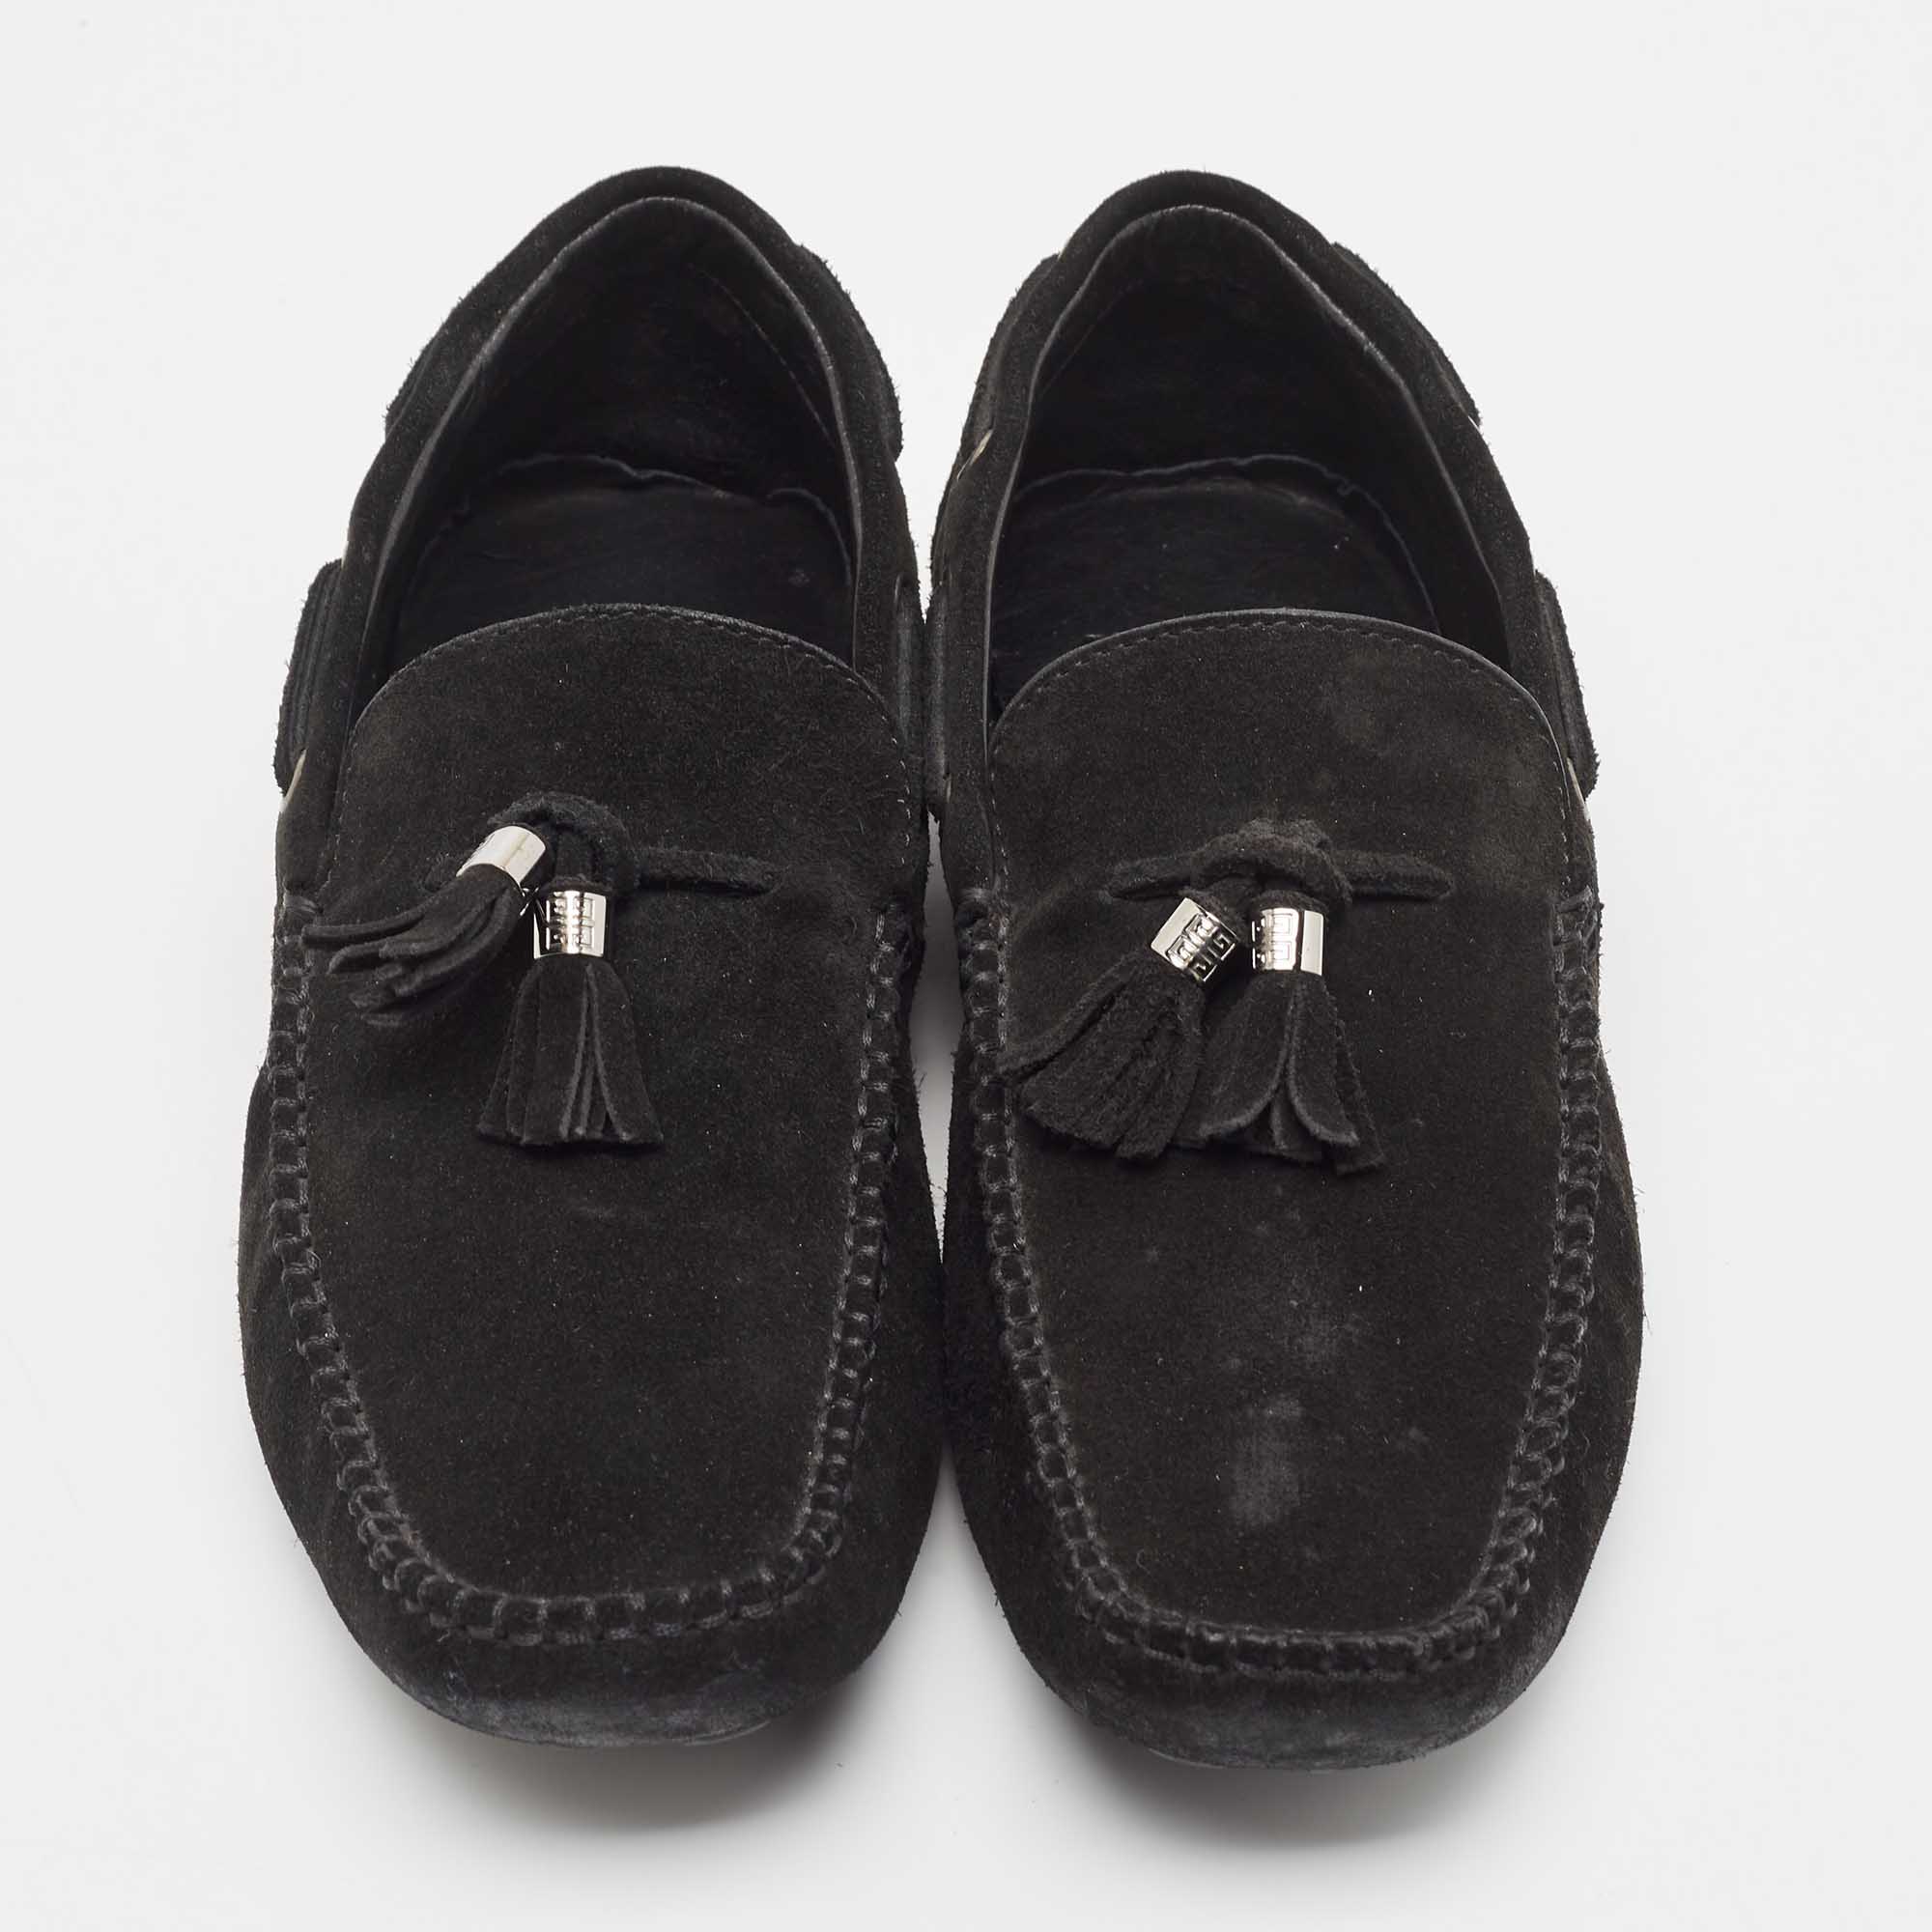 Givenchy Black Suede Tassel Detail Slip On Loafers Size 41